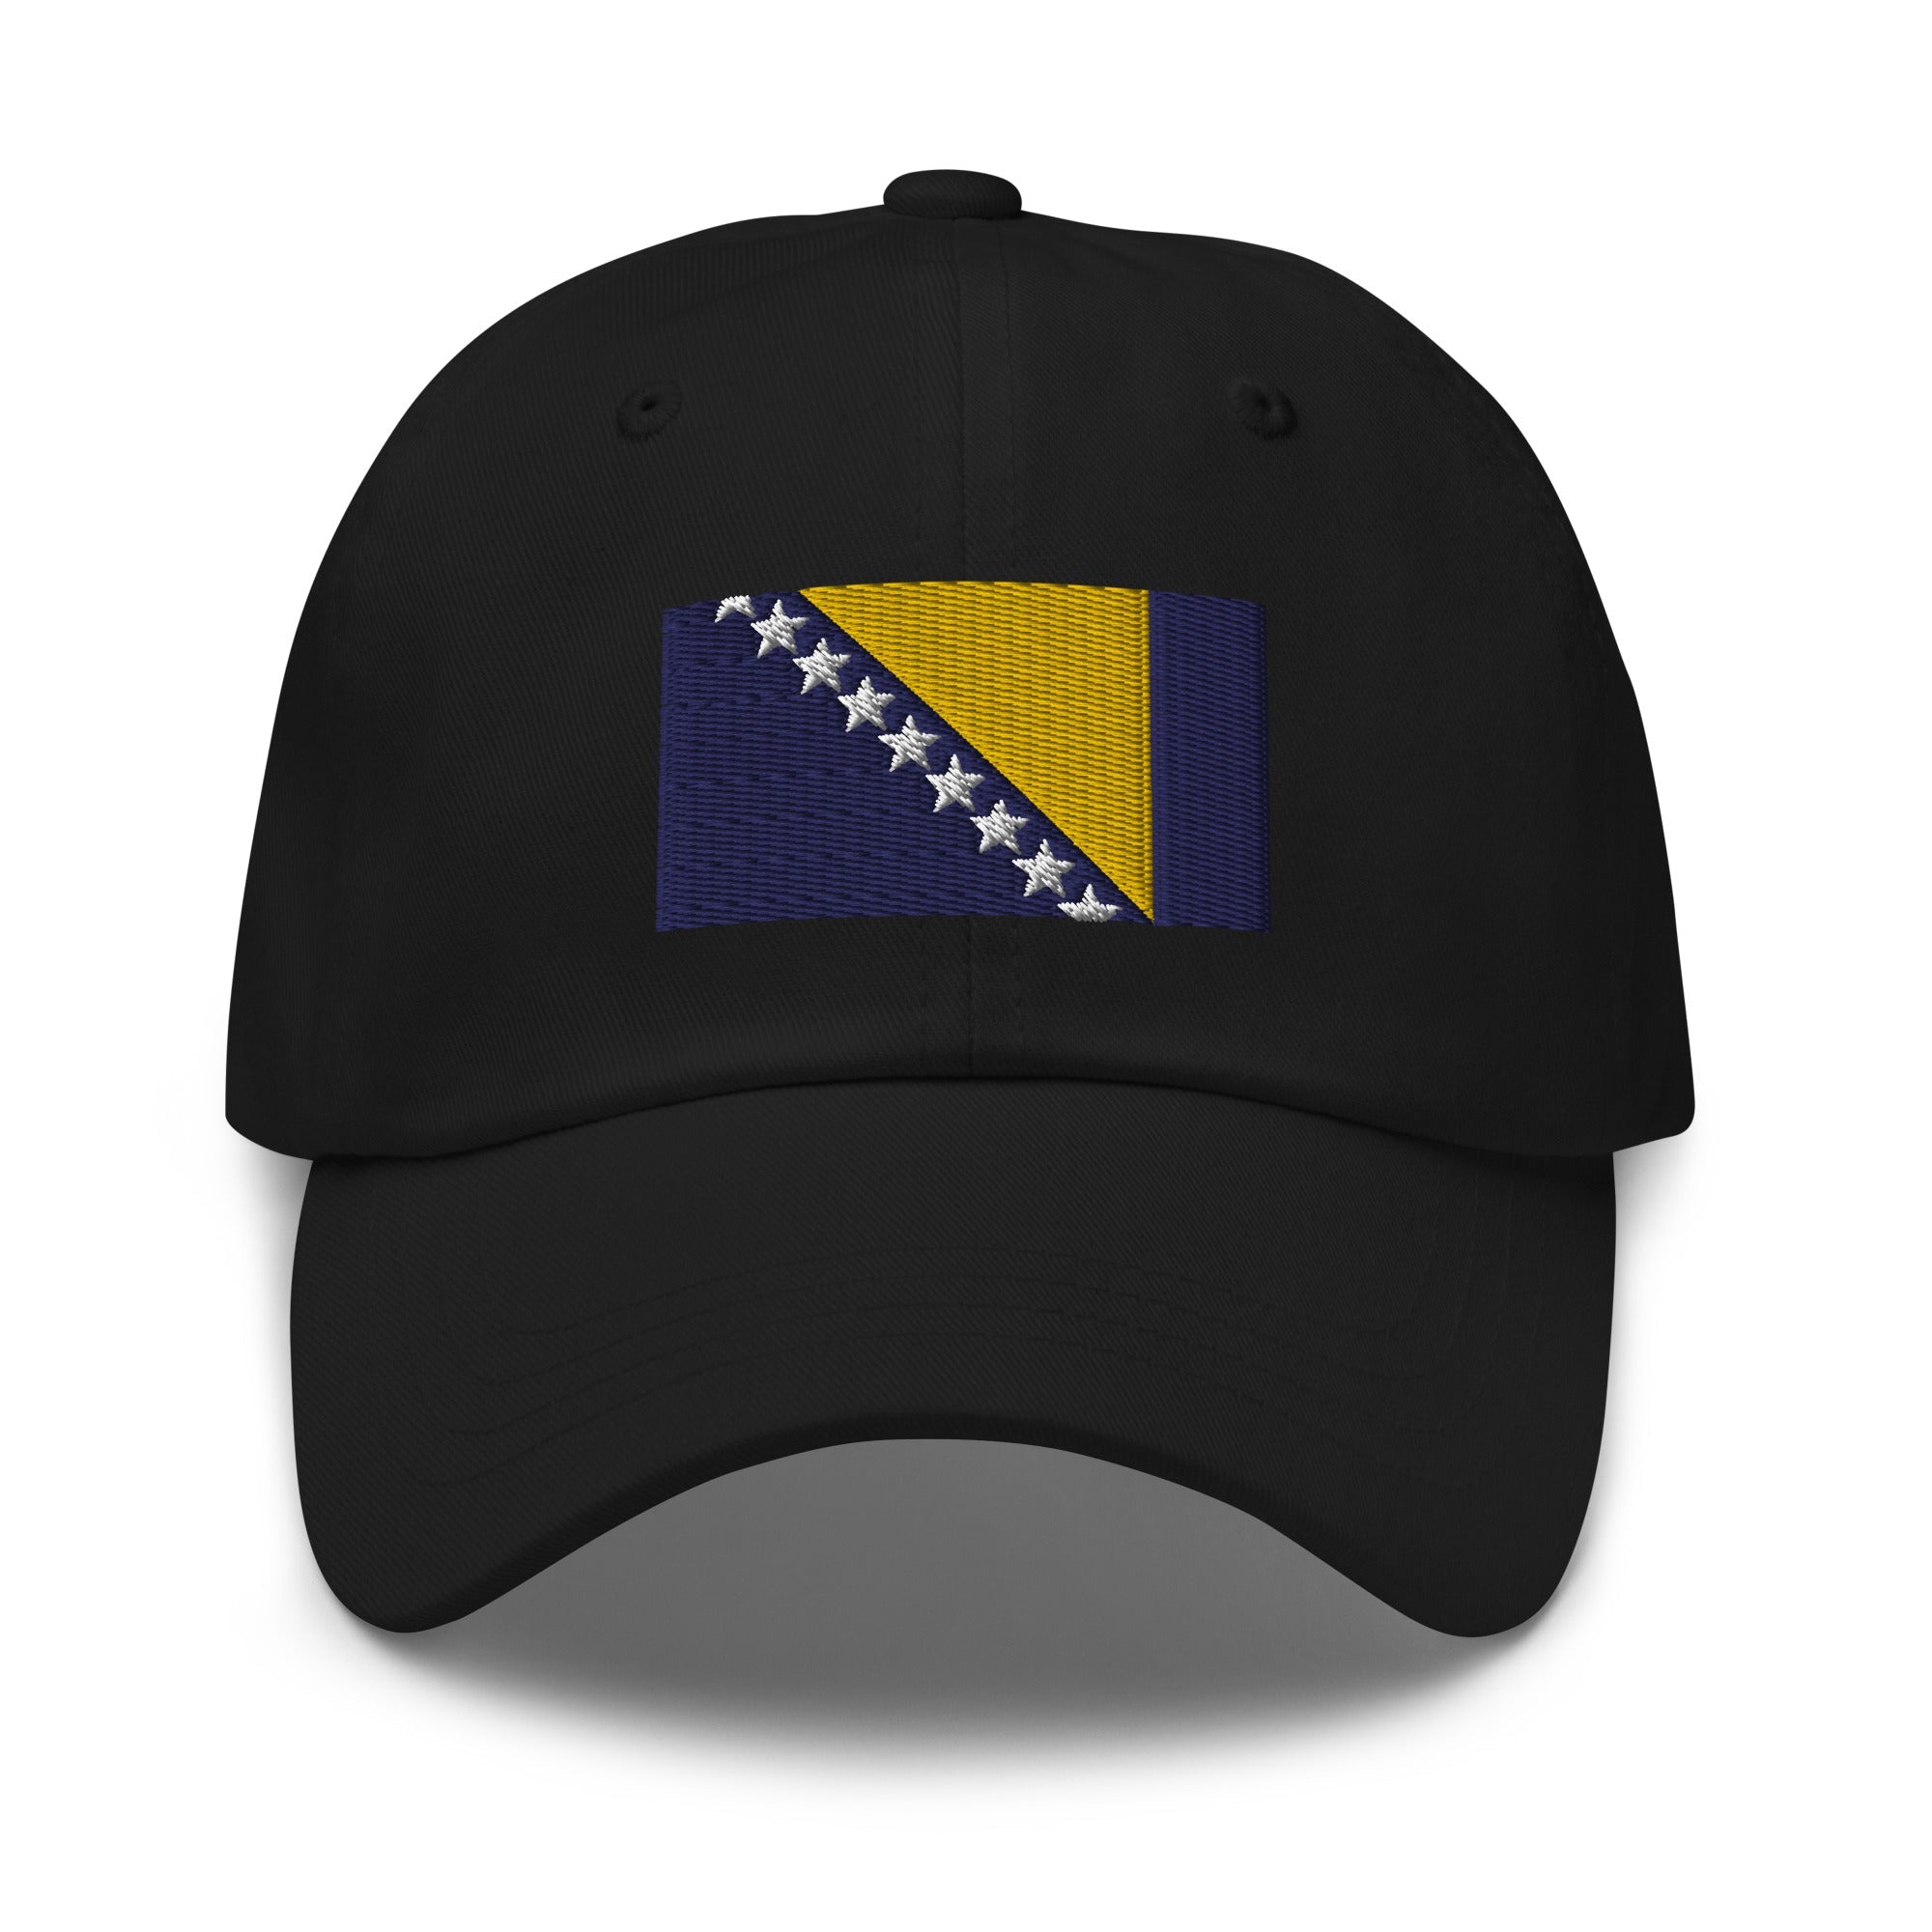 Bosnia and Herzegovina Flag Cap - Adjustable Embroidered Dad Hat